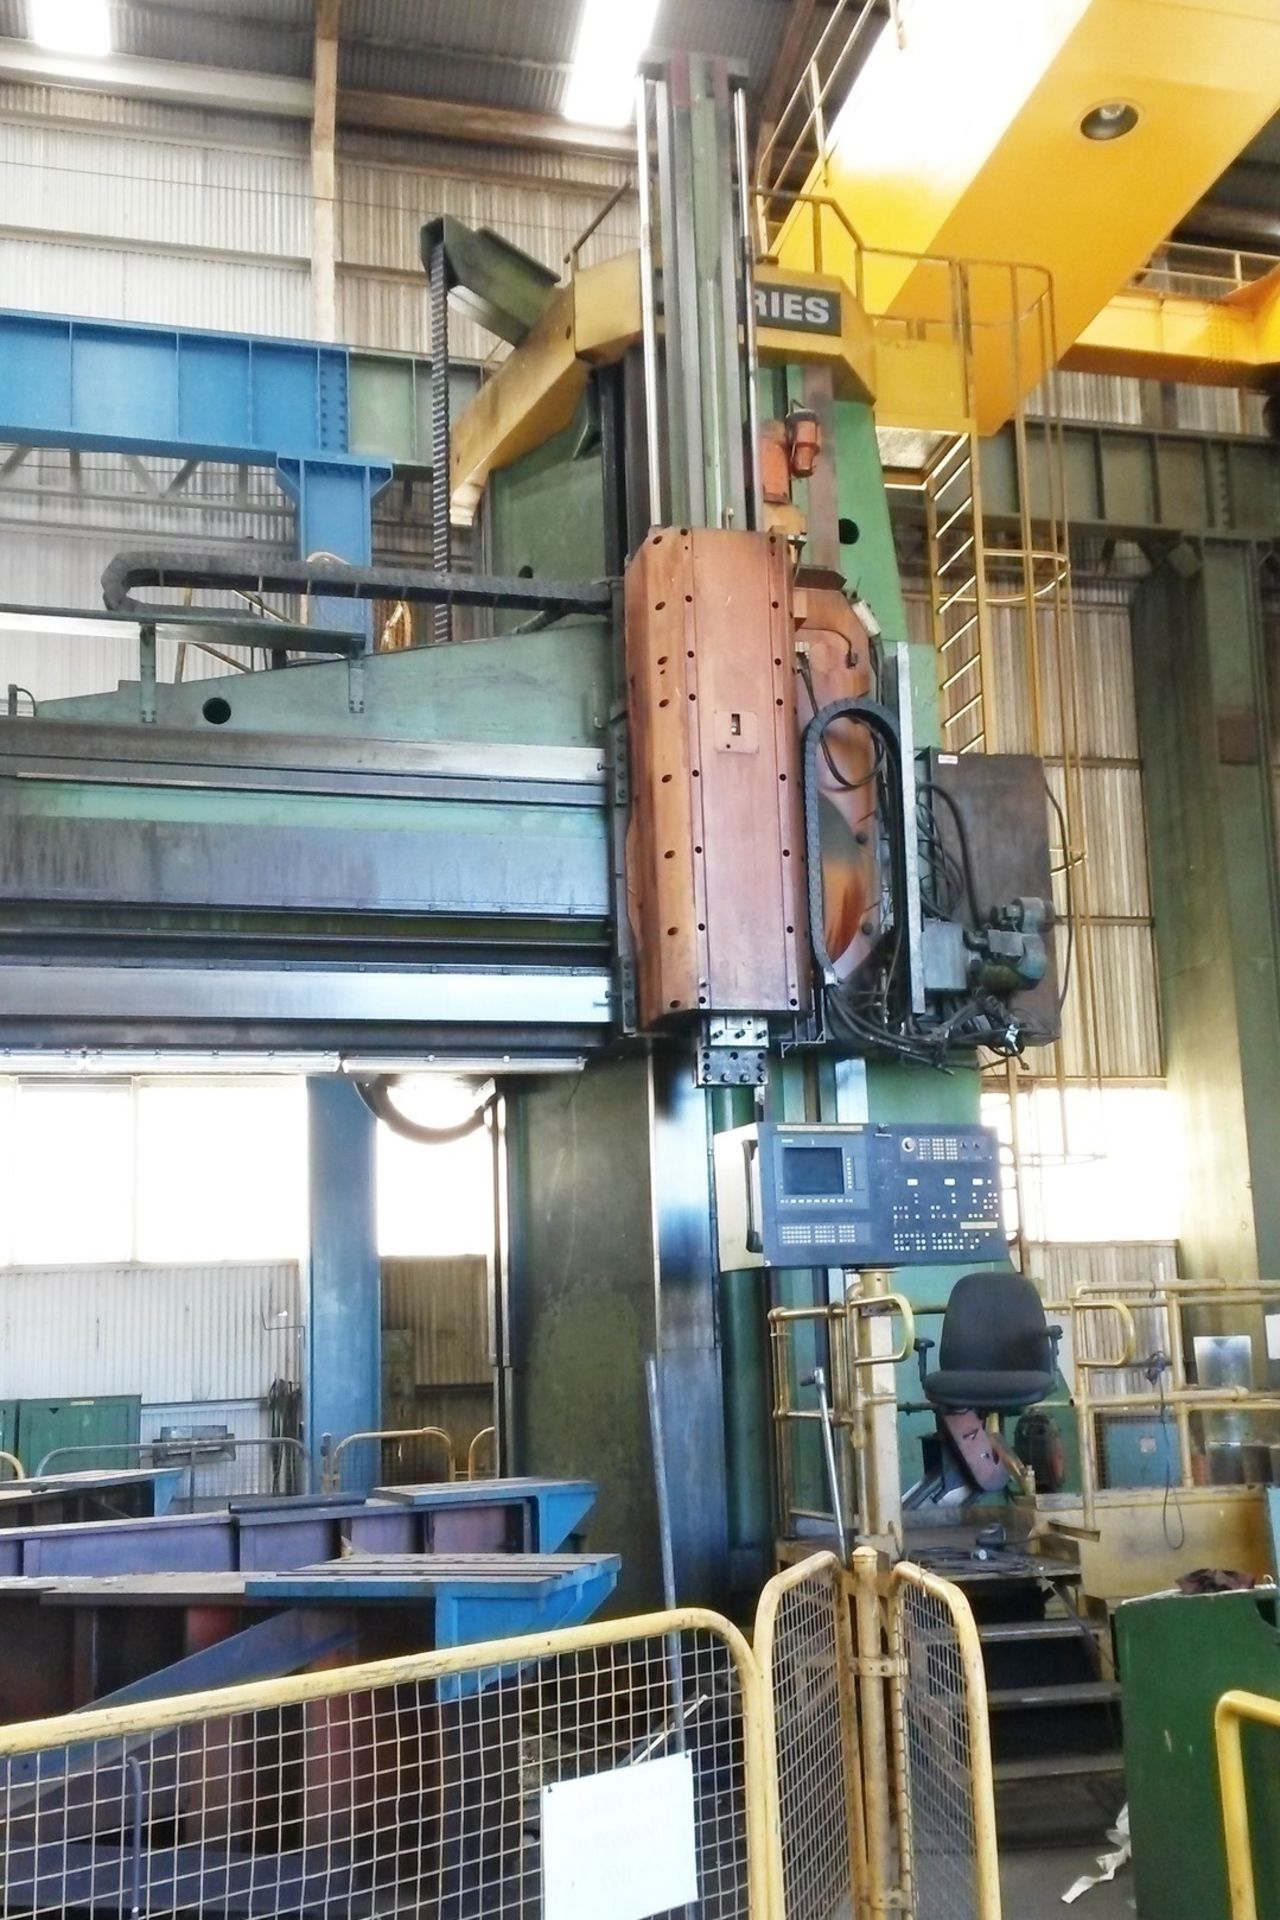 Dorries SDE600 CNC Vertical Boring Mill - Image 2 of 2